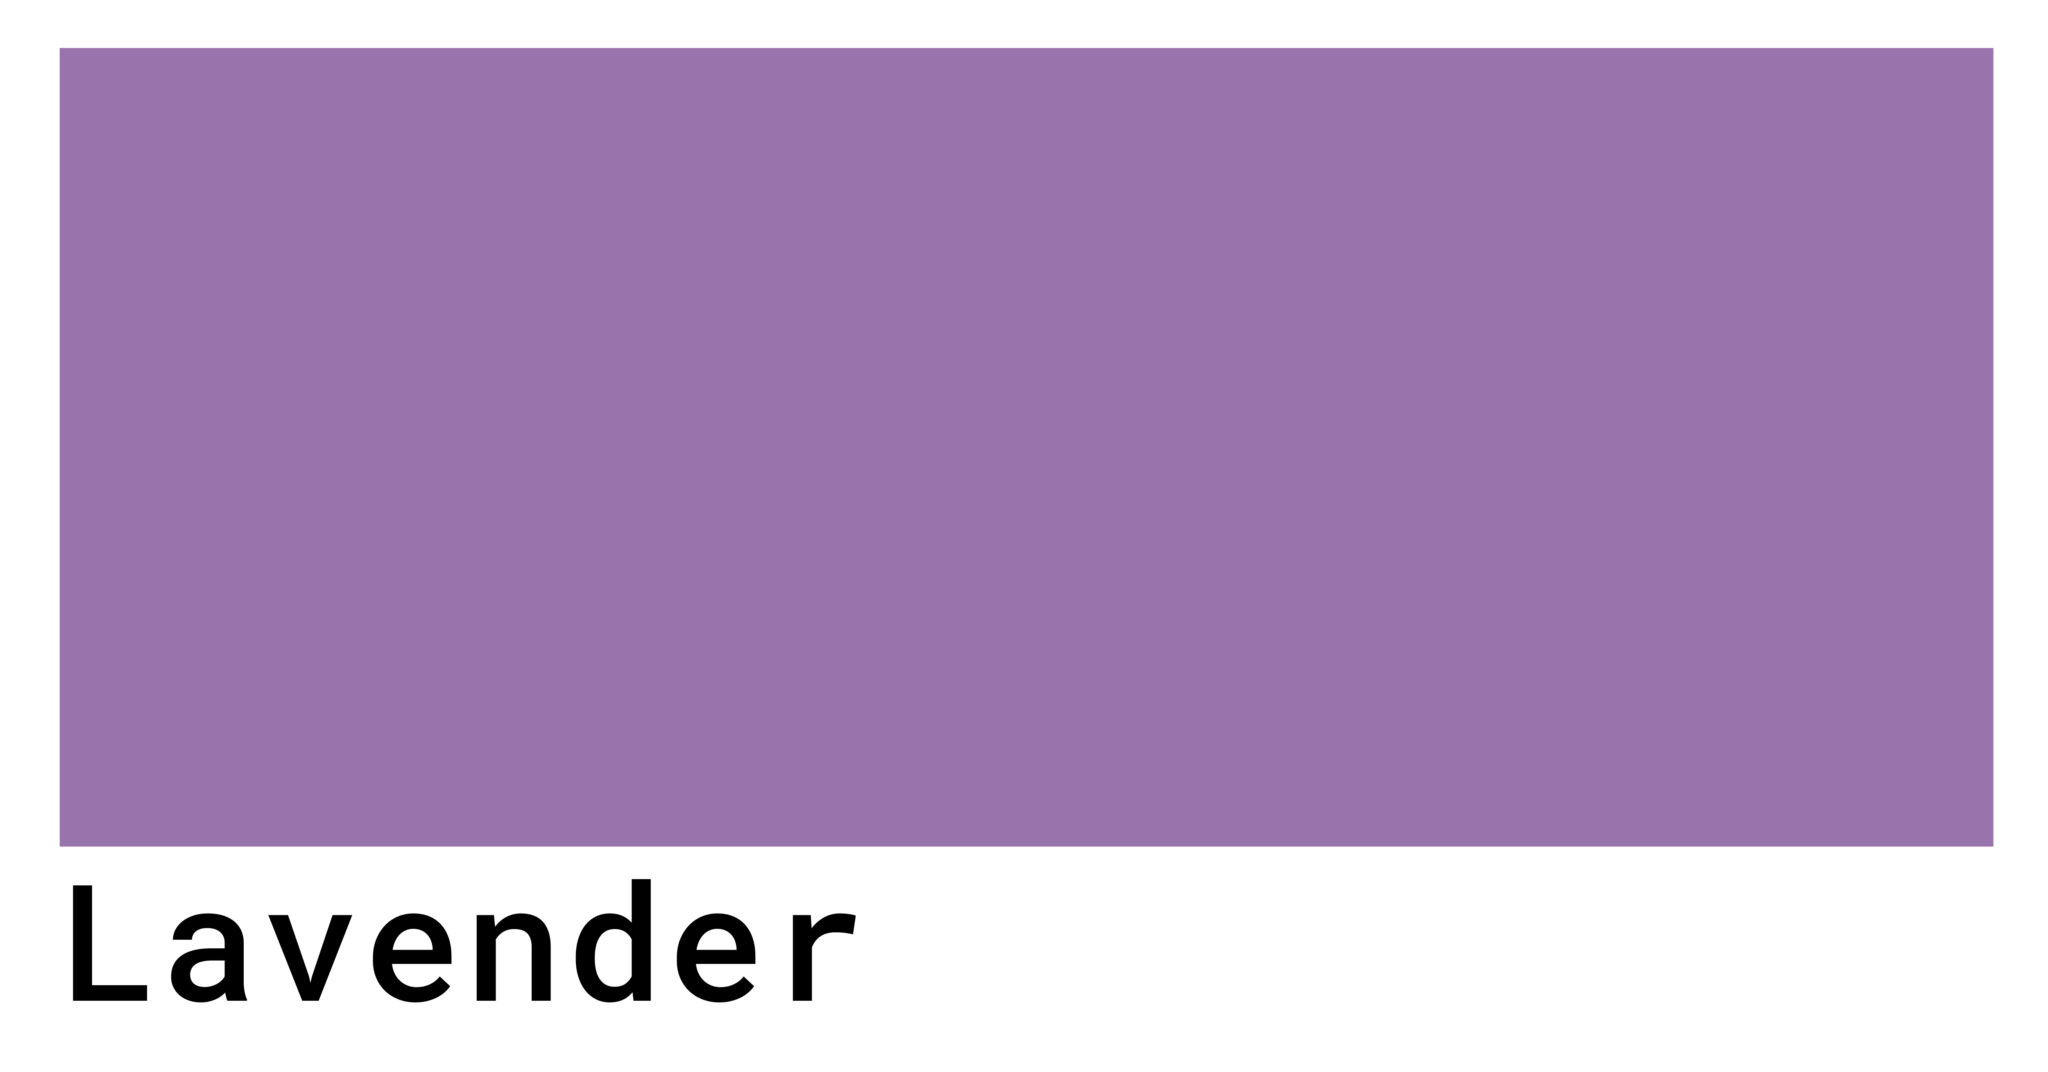 2. Lavender - wide 2